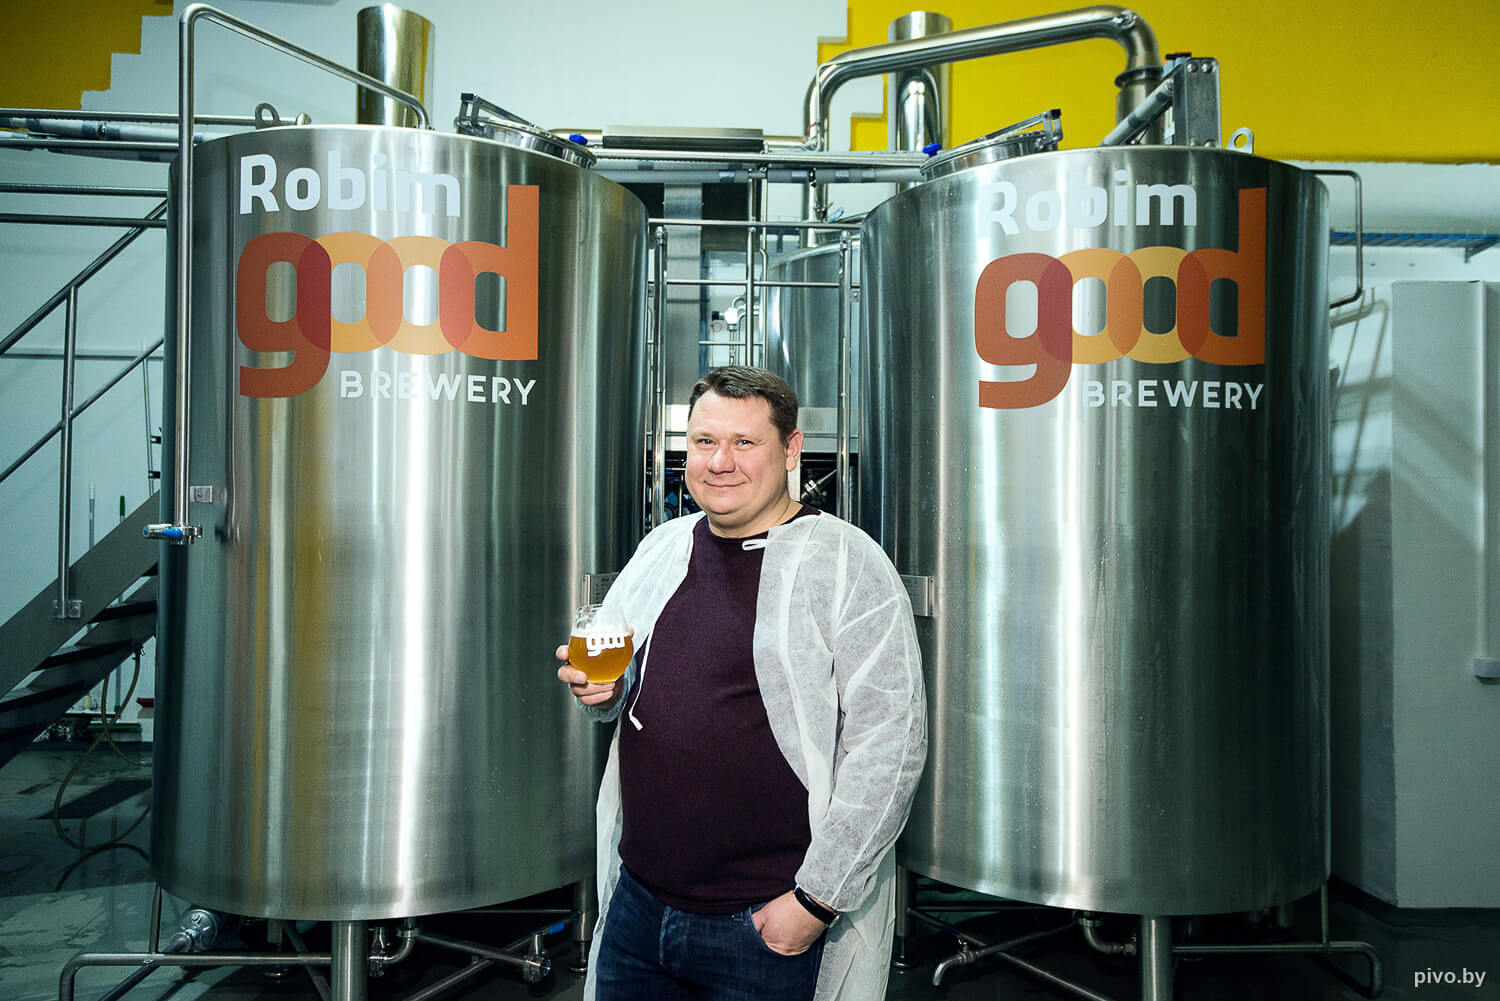 robim-good-brewery26.jpg